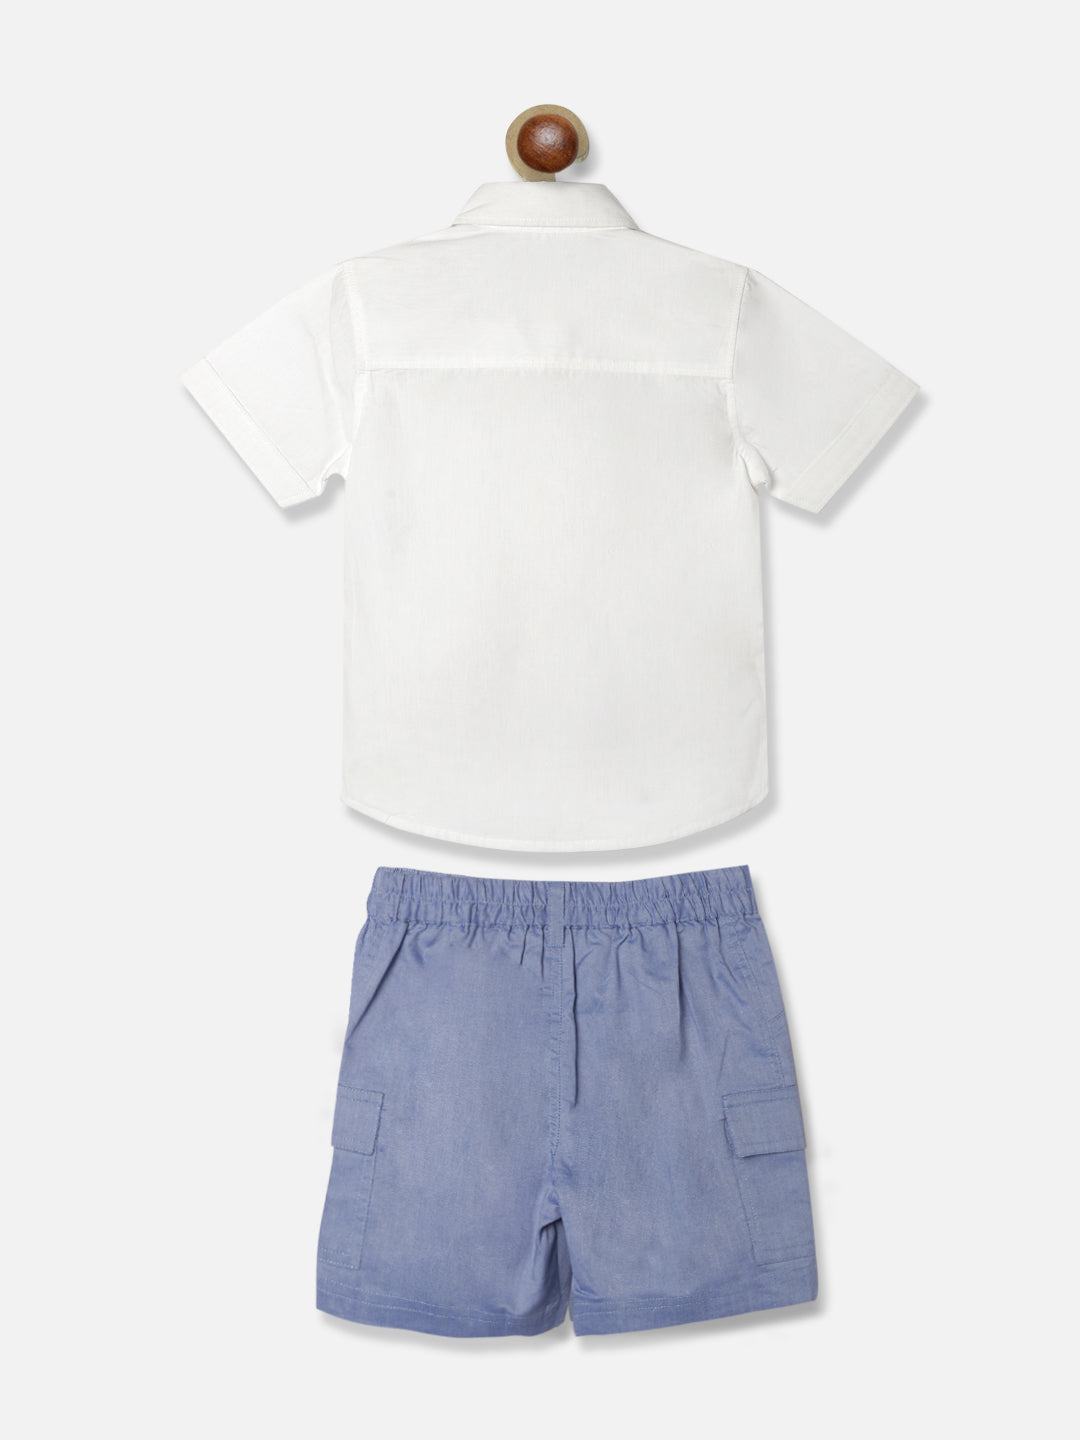 Nautinati Boys Self Design Pure Cotton Shirt With Shorts